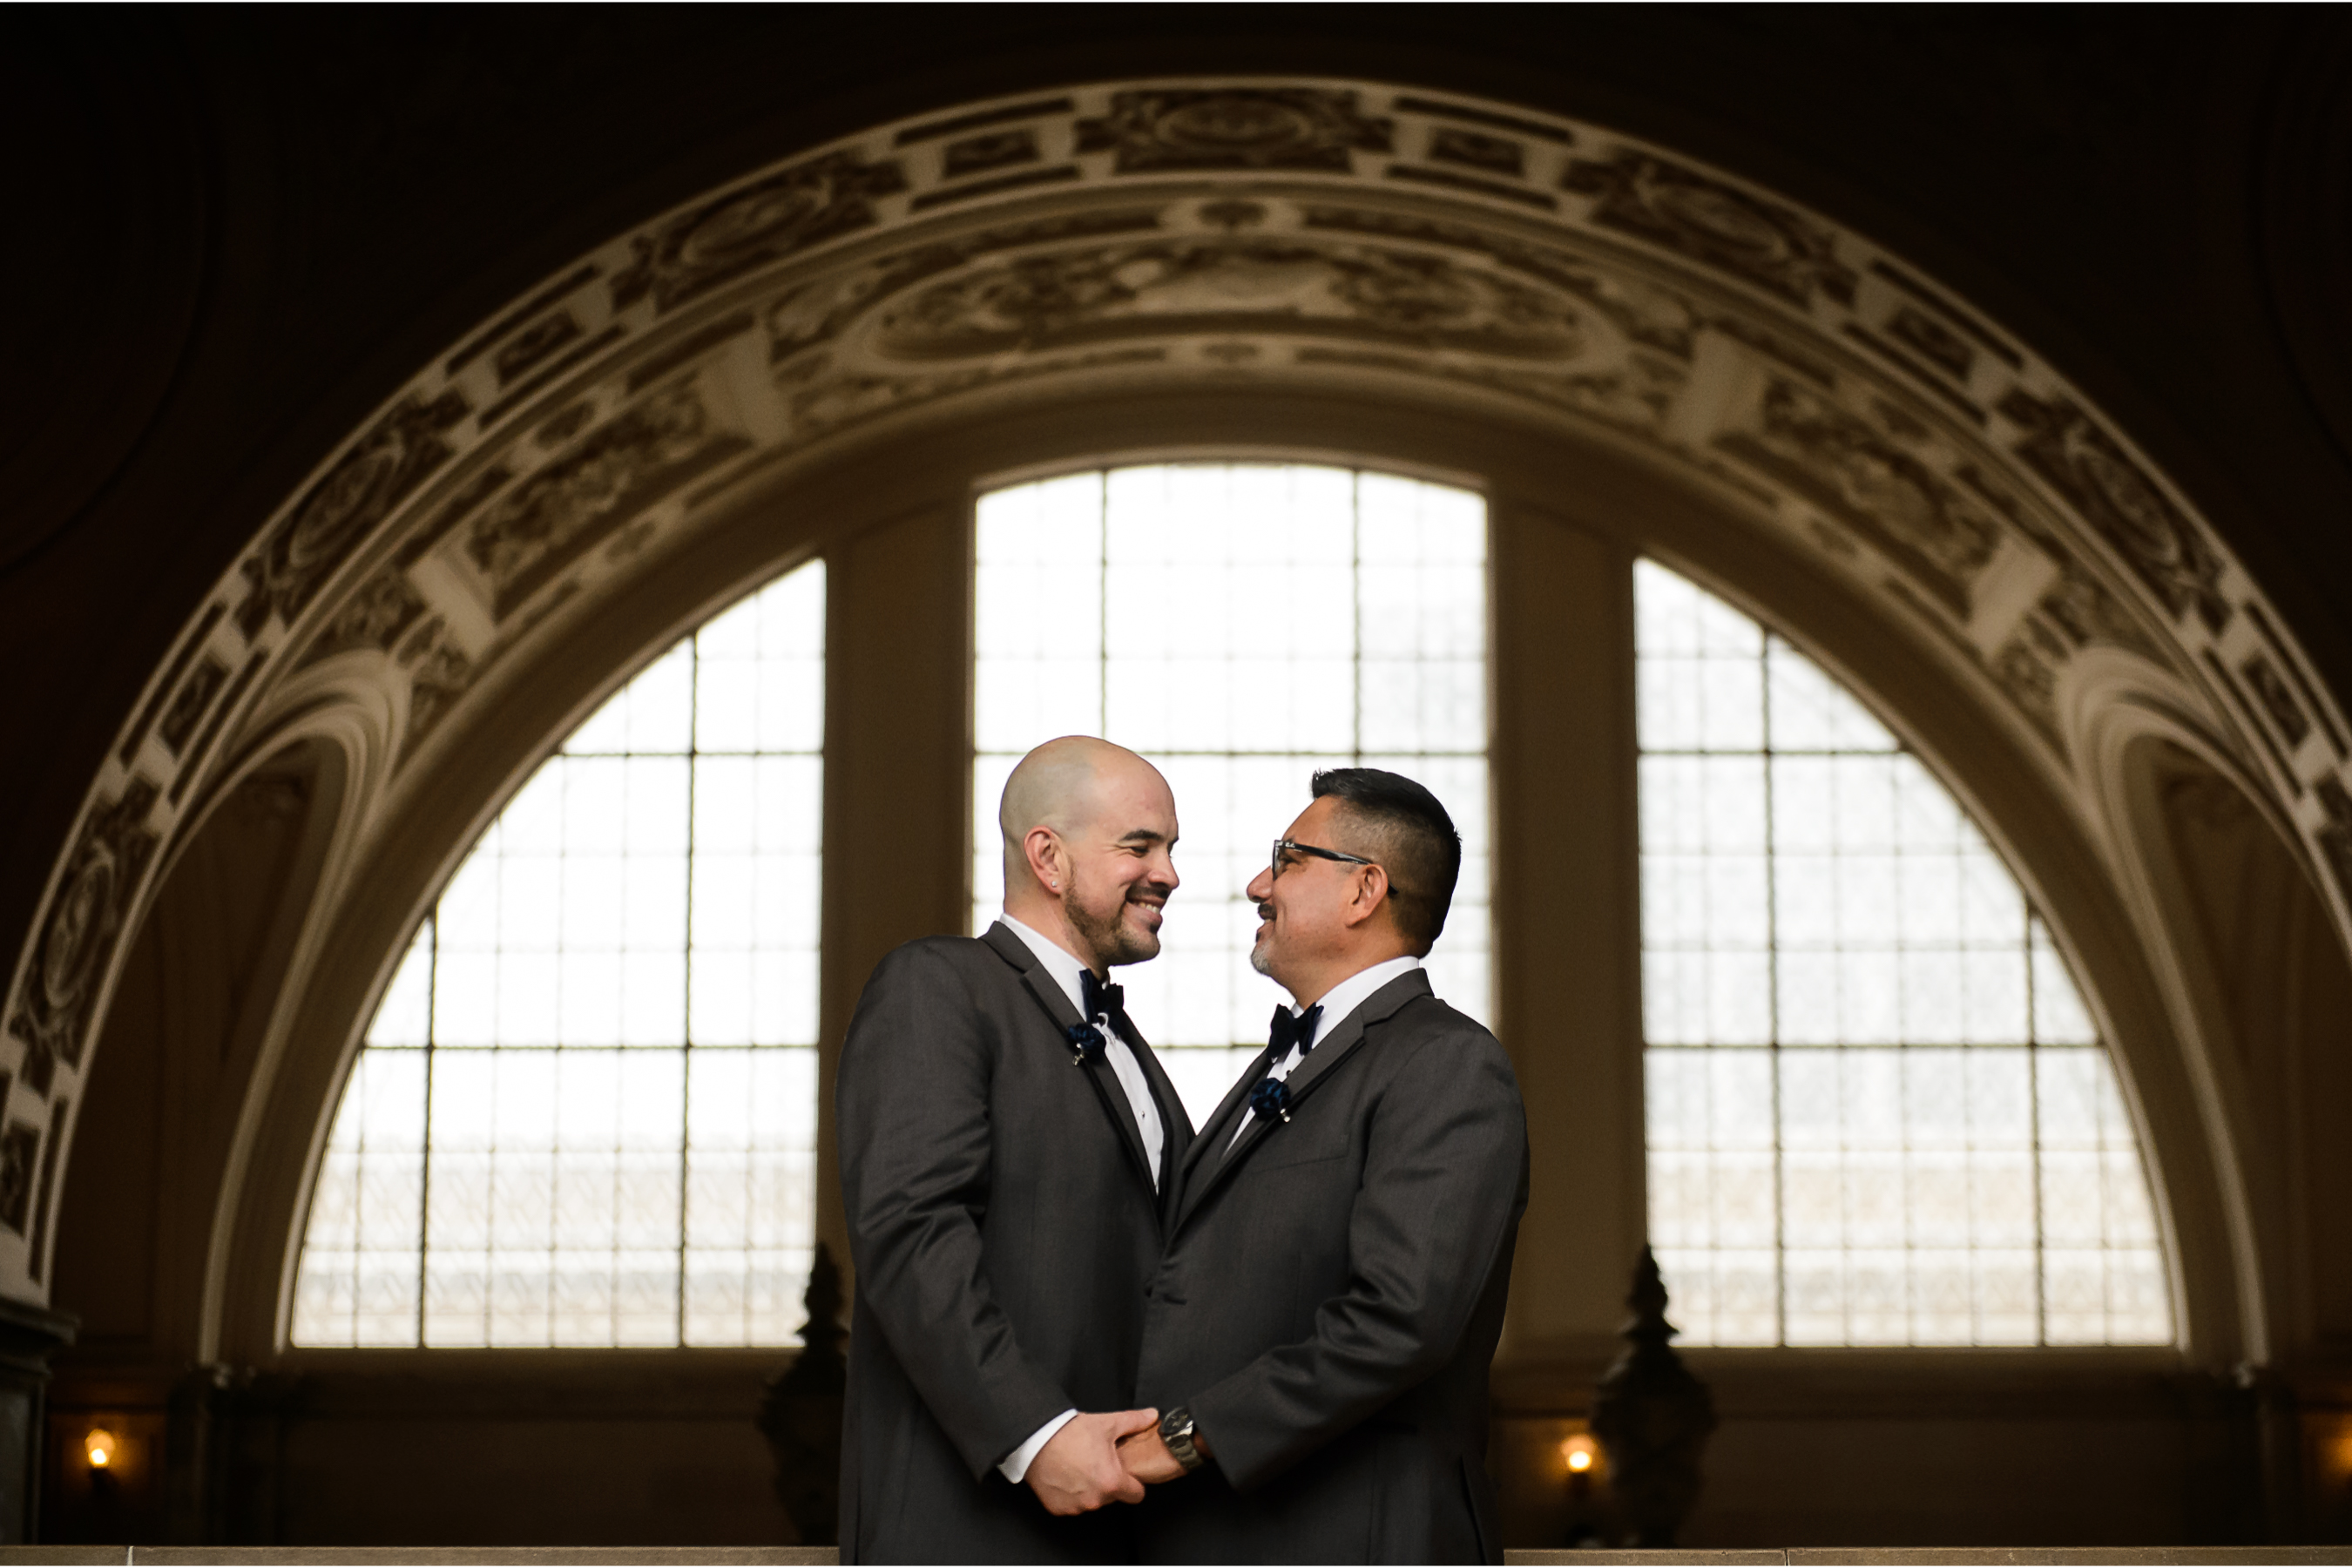 San Francisico City Hall Wedding Photography taken by California based wedding photographer Benson Lau Photography